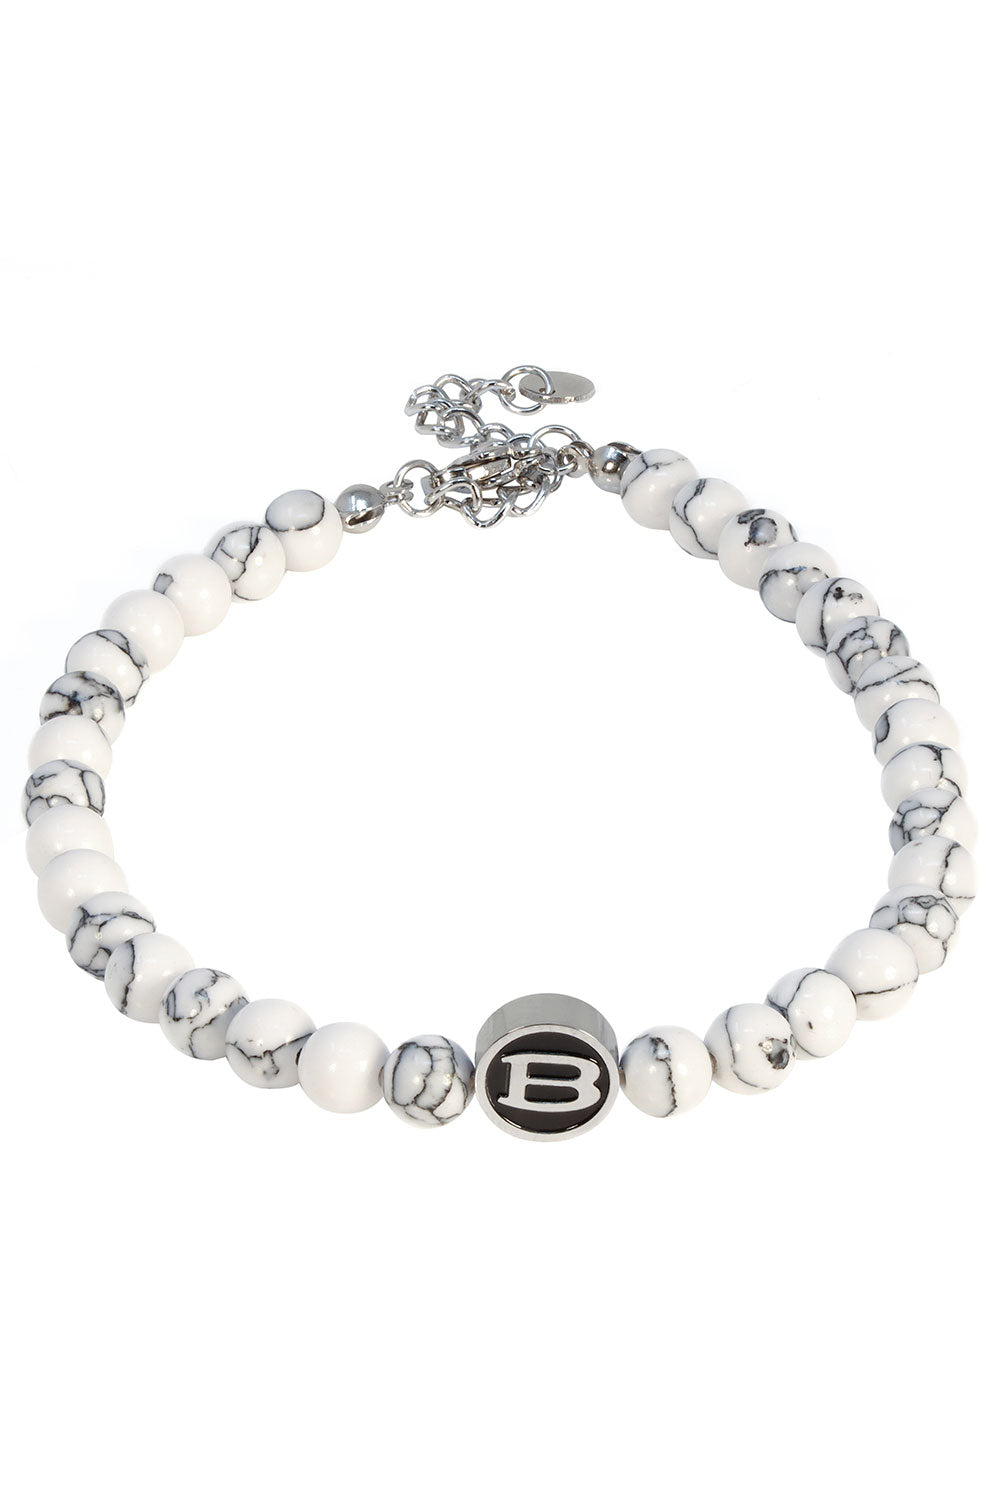 Barabas Unisex Crustal Gemstone Precious Bracelets 4BB02 White